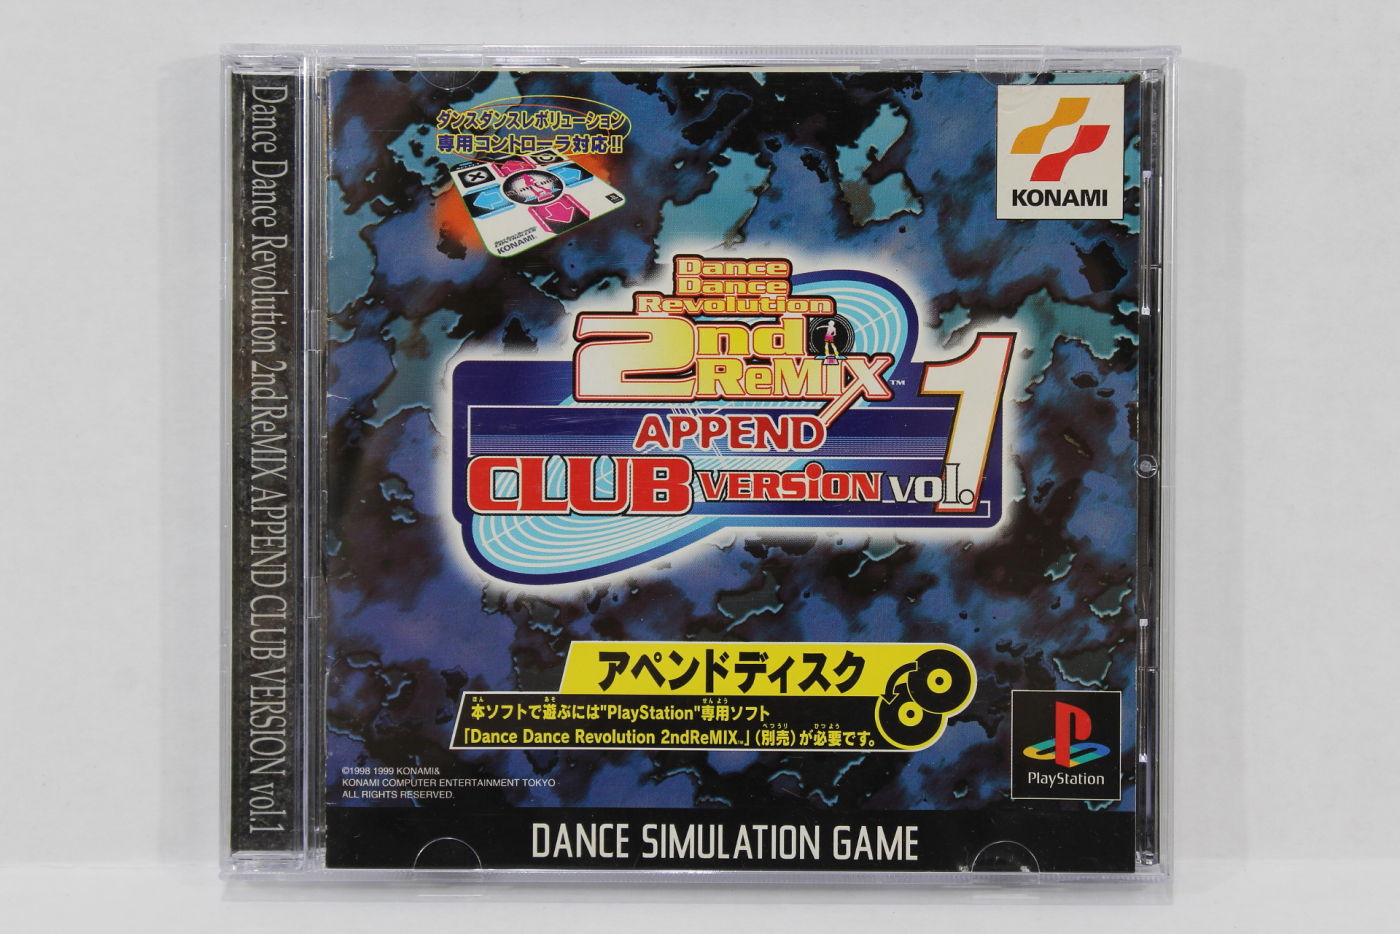 Dance Dance Revolution DDR 2nd ReMIX Club Version Vol.1 (B) PS1